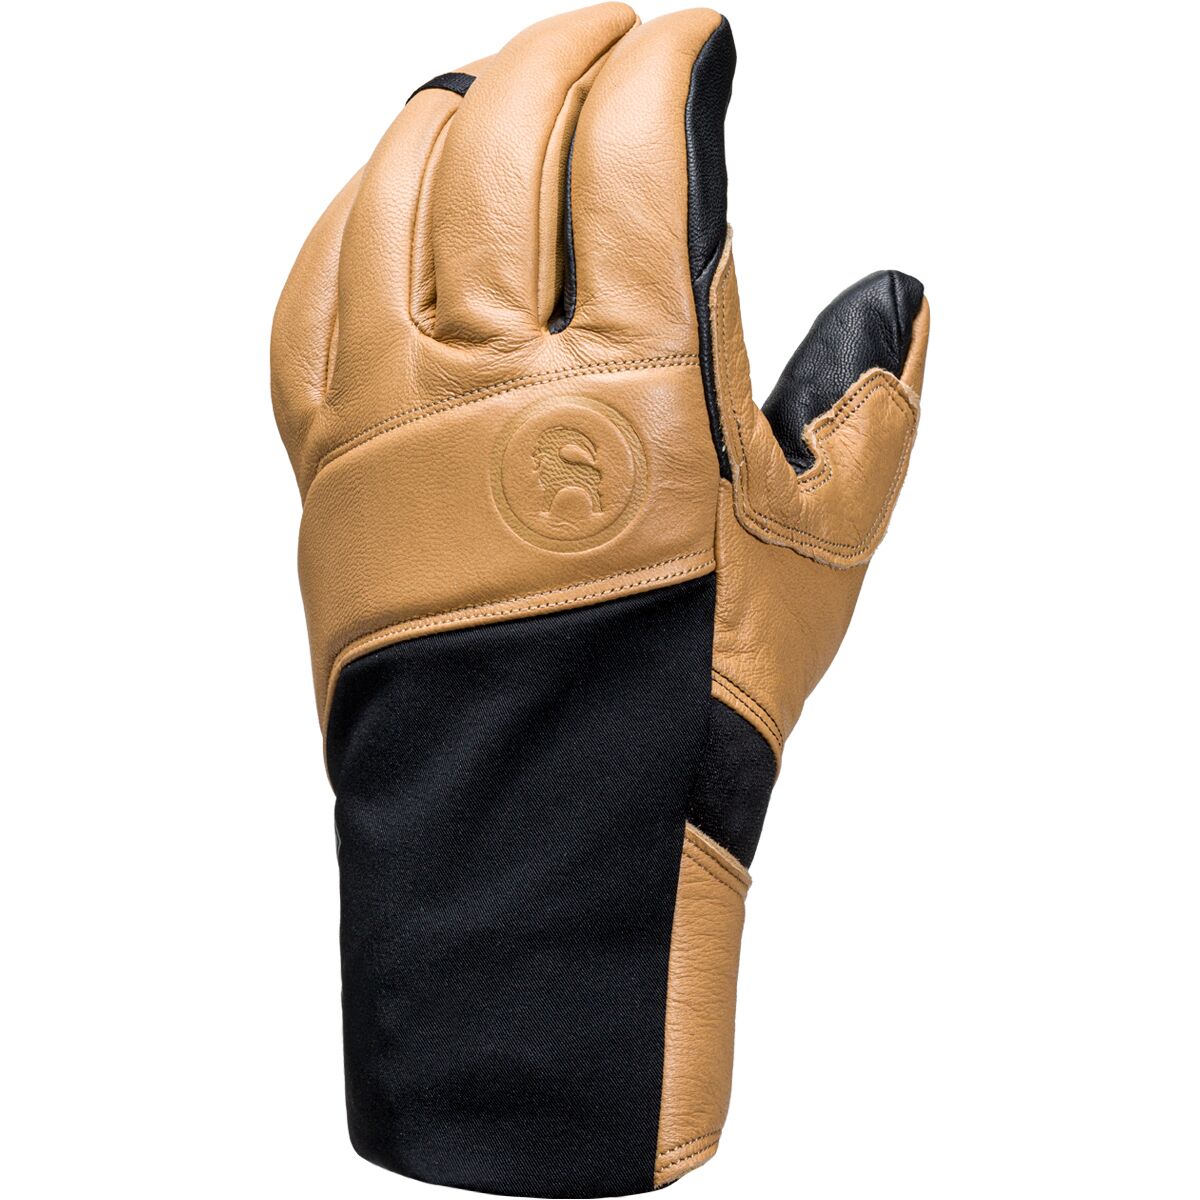 NoName gloves discount 92% Beige Single WOMEN FASHION Accessories Gloves 